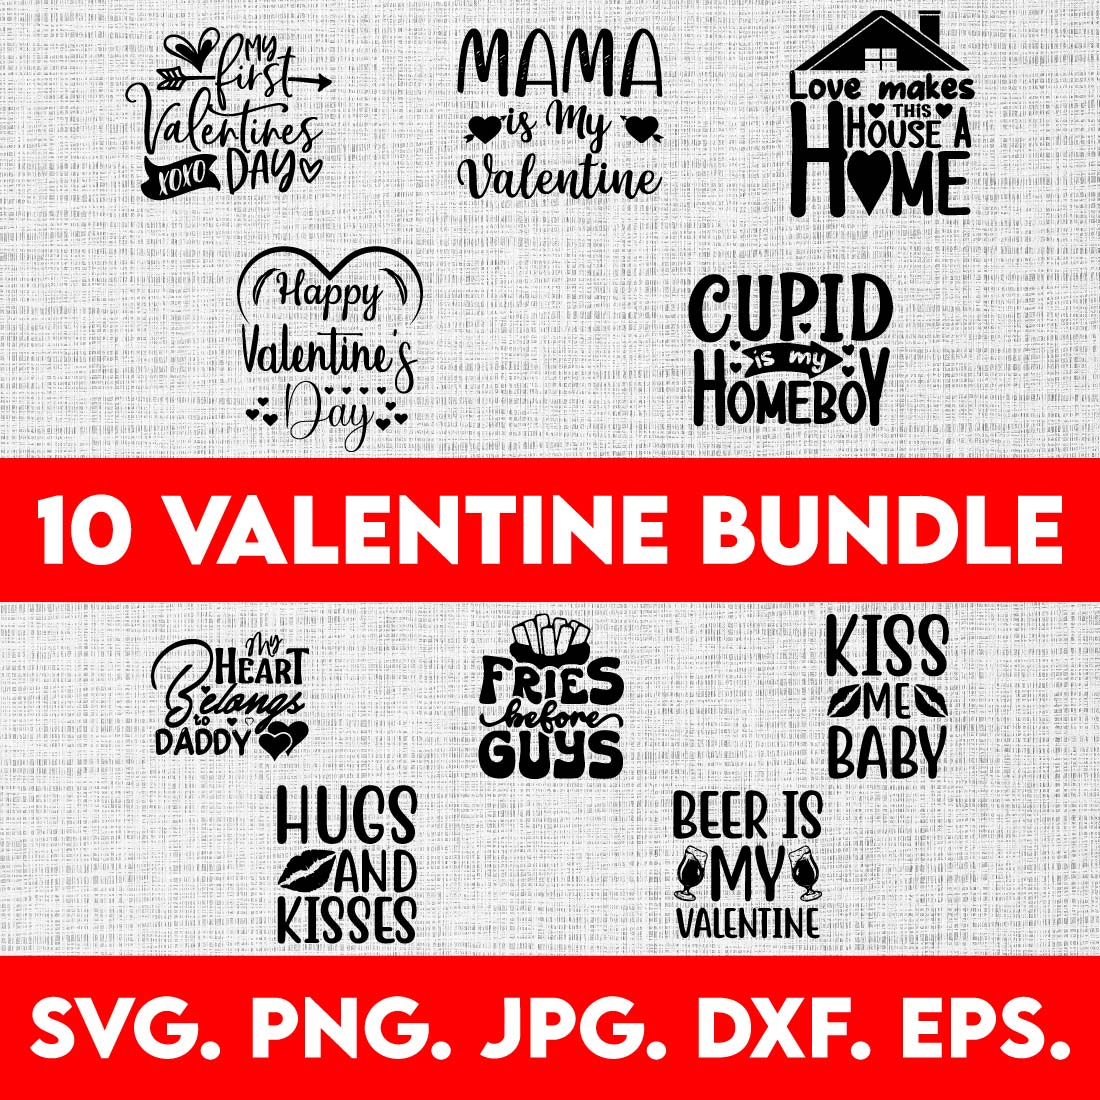 Valentine's Day SVG Bundle cover image.